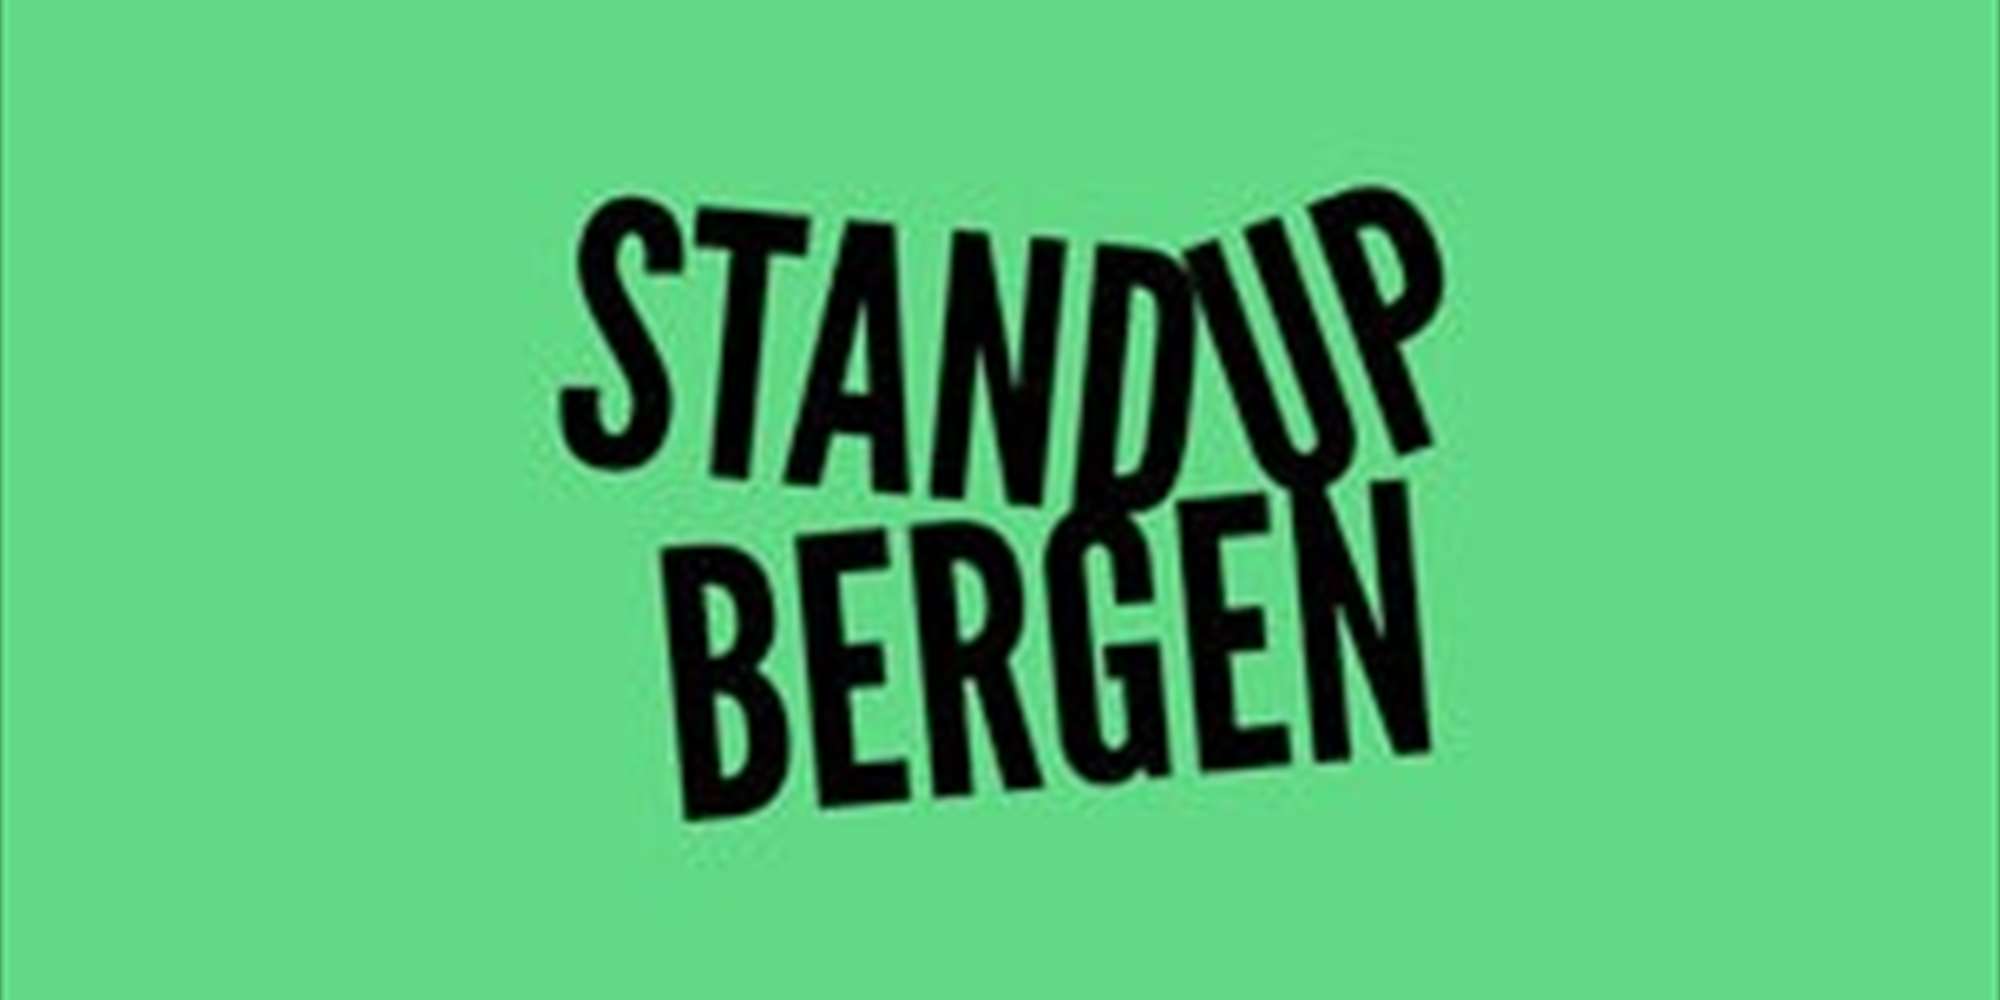 Standup Bergen